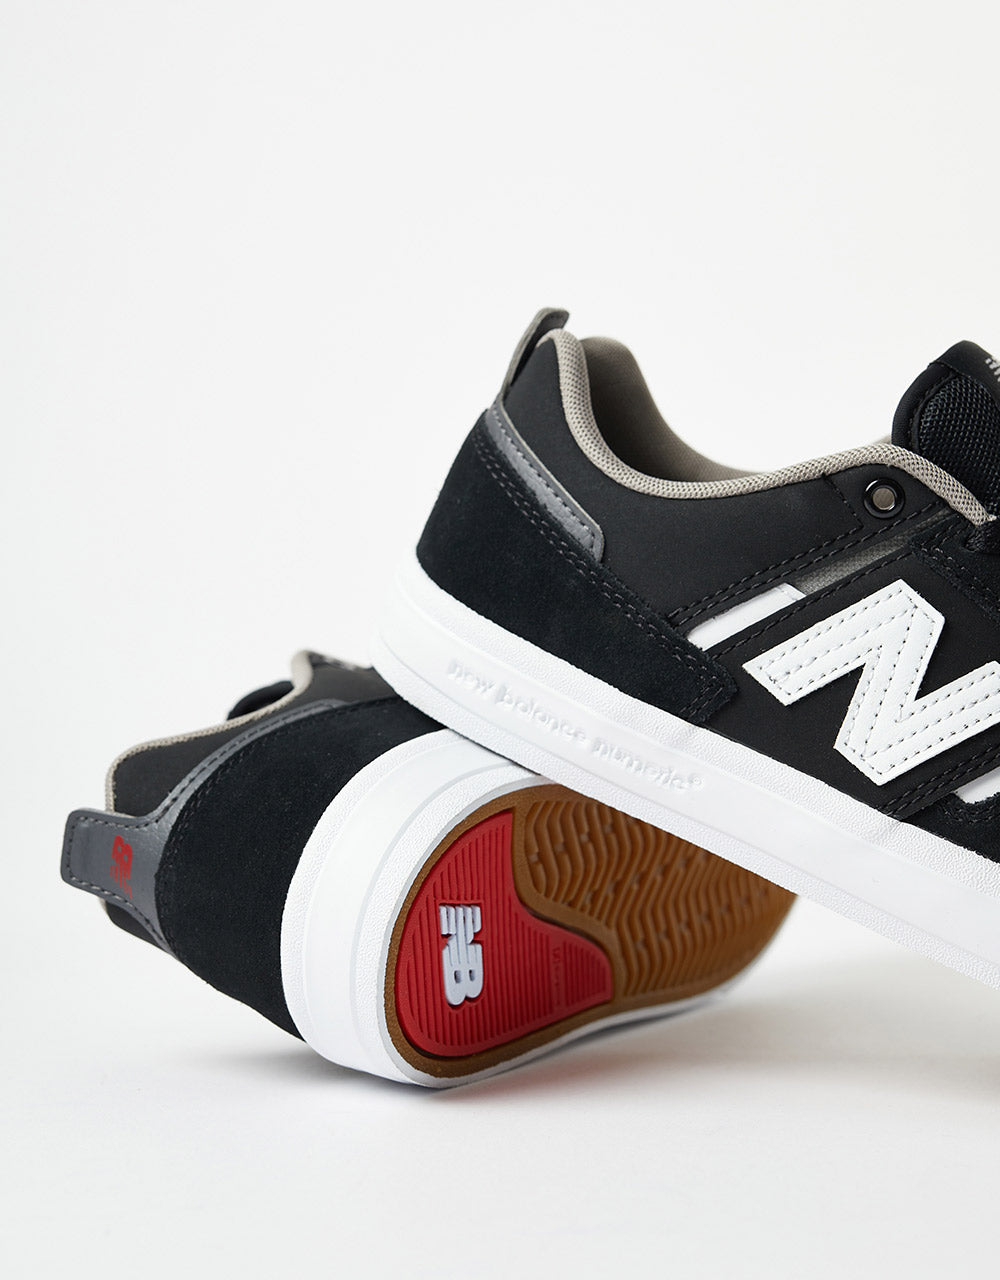 New Balance Numeric 306 Skate Shoes - Black/White